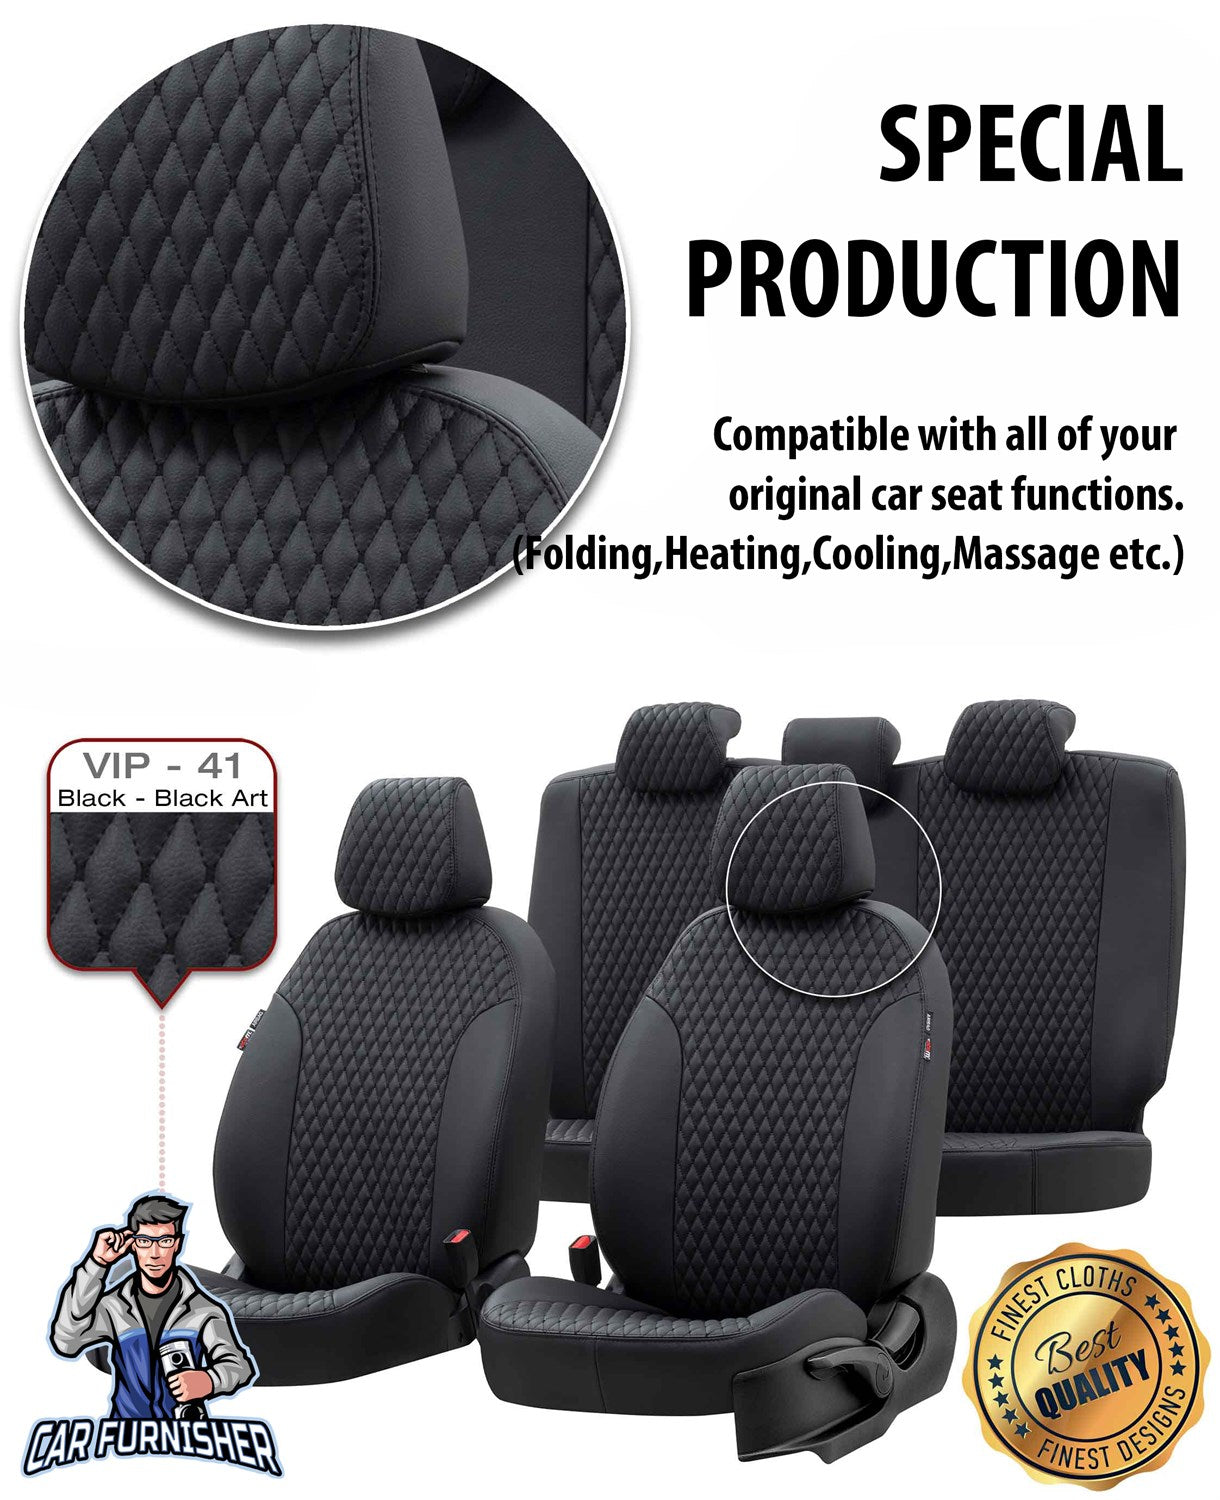 Tesla Model S Seat Cover Amsterdam Leather Design Black Leather